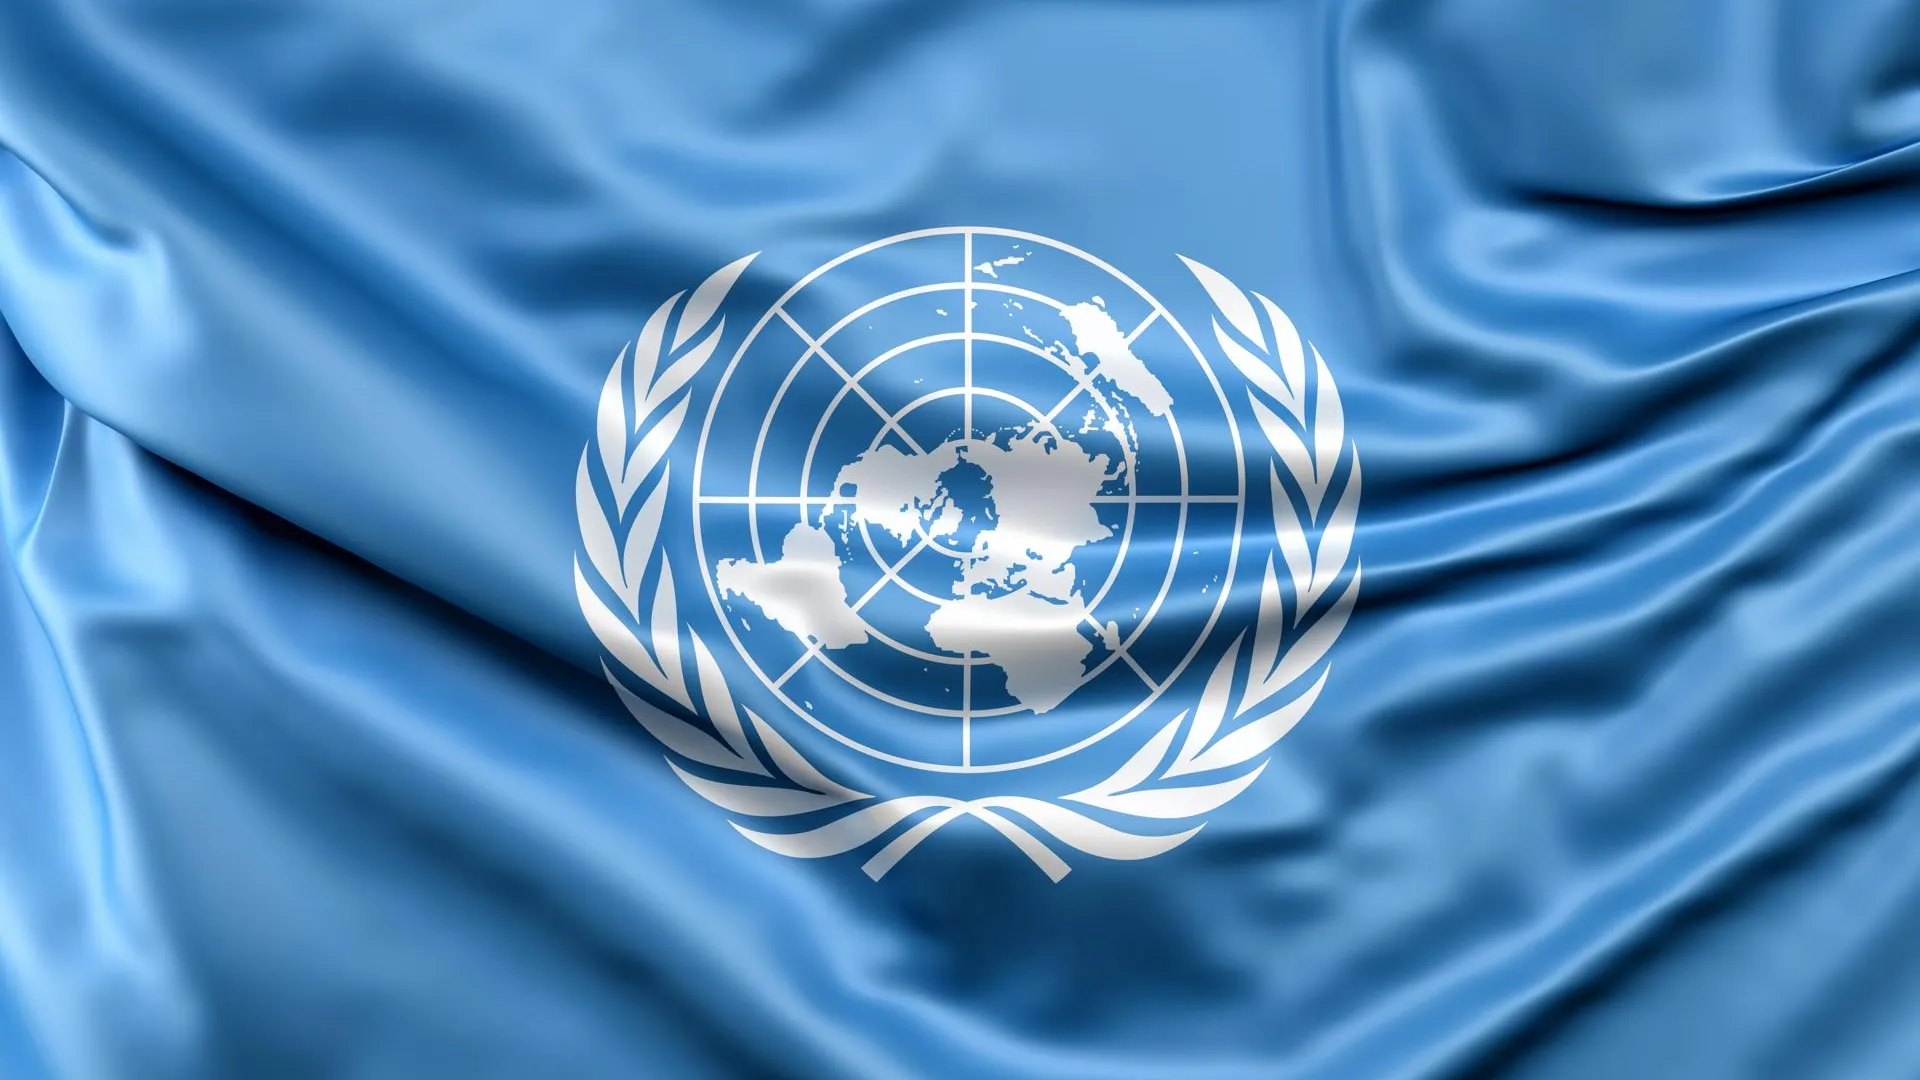 Цвета оон. Флаг ООН. ООН United Nations. United Nations флаг. Первый флаг ООН.